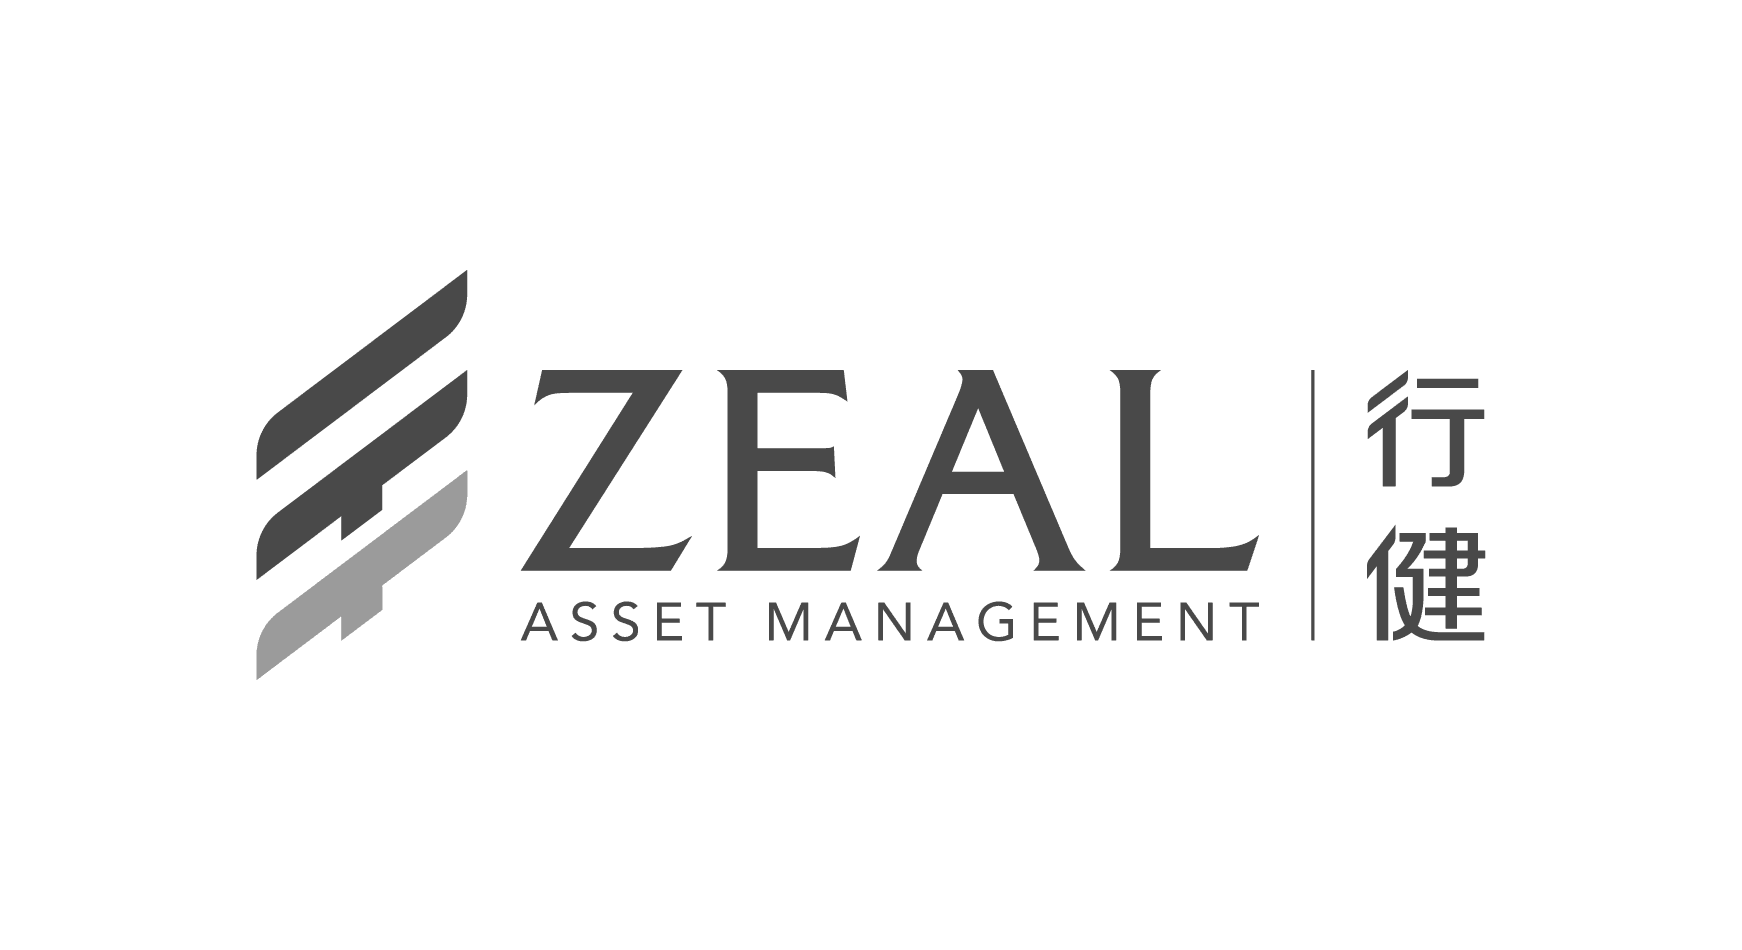 Zeal Asset Management